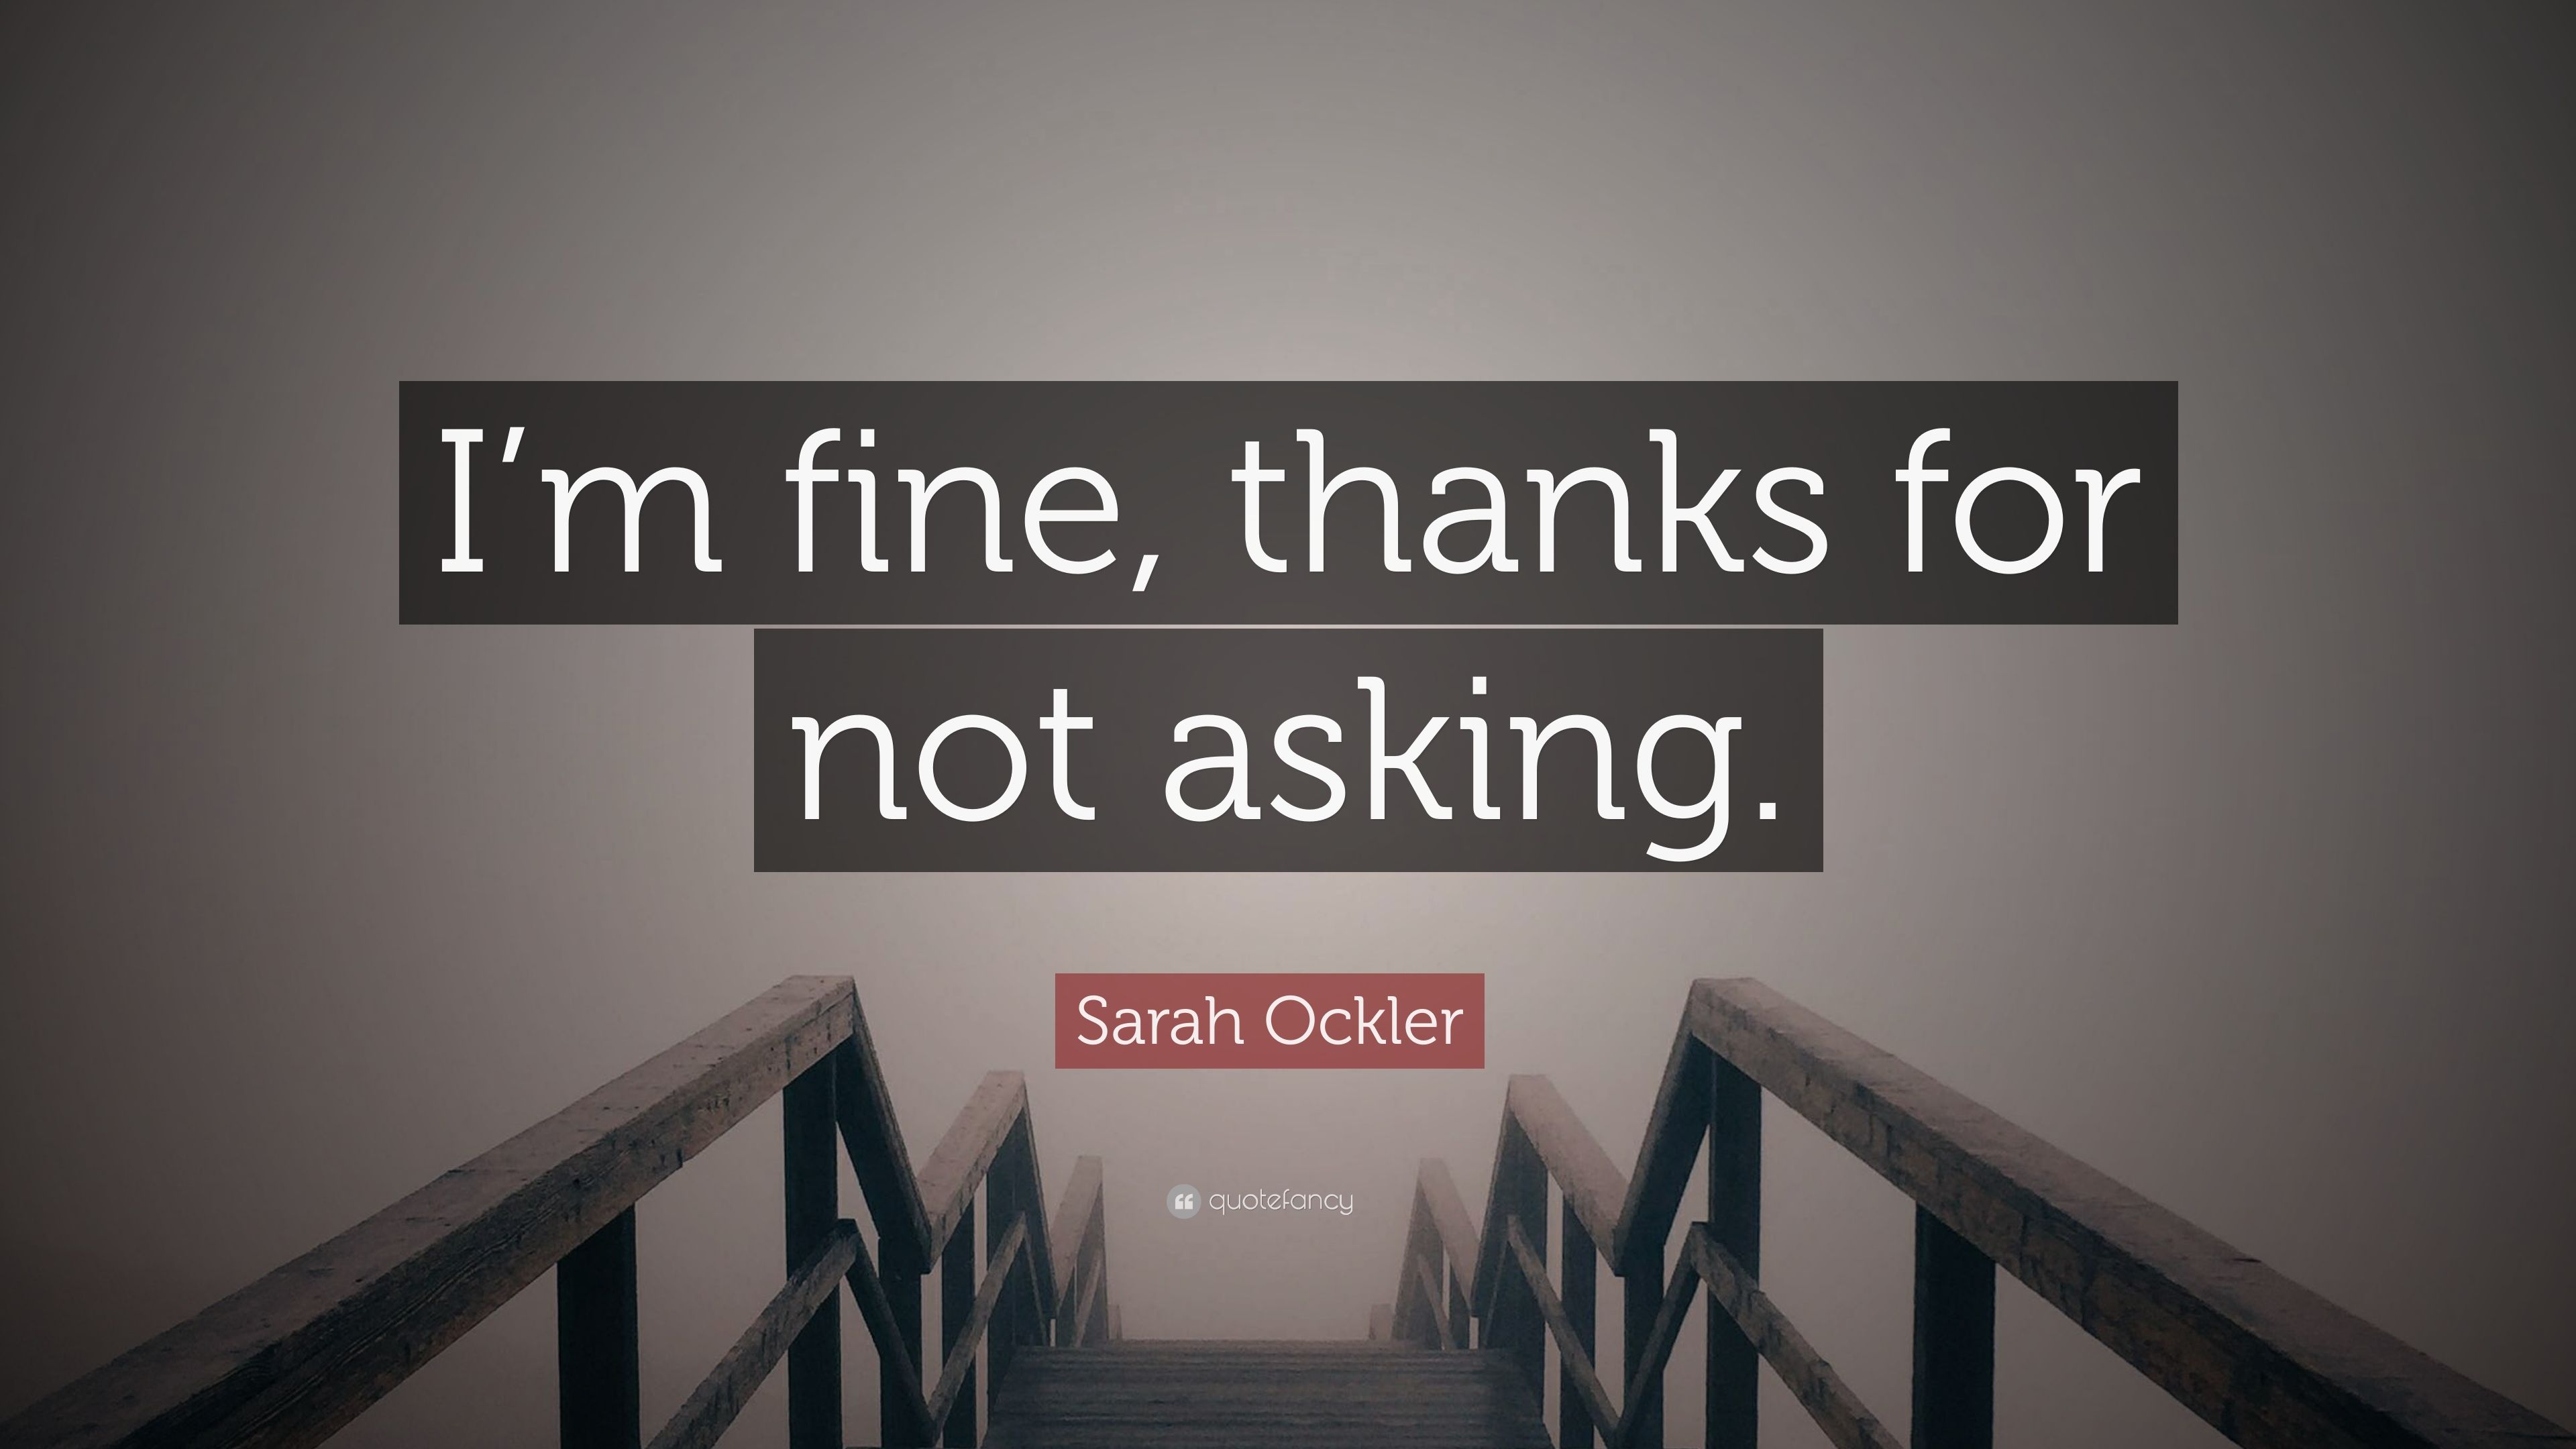 Sarah Ockler Quote: “I'm fine, thanks for not asking.” (12 wallpaper)